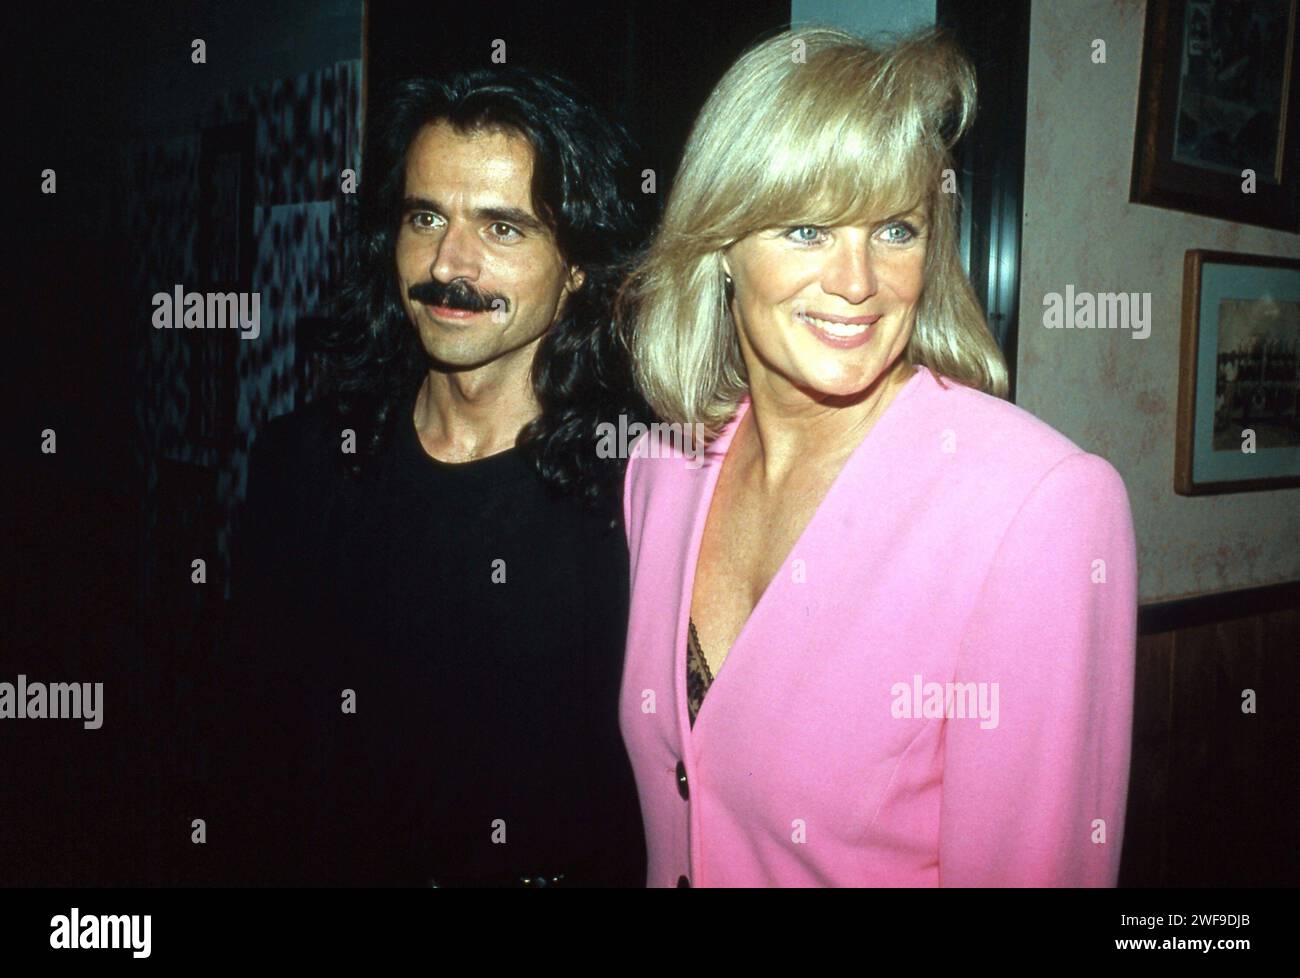 Yanni and Linda Evans at celebrity event, New York 1991. Photo: Oscar Abolafia/Everett Collection (lindaevans017) Stock Photo